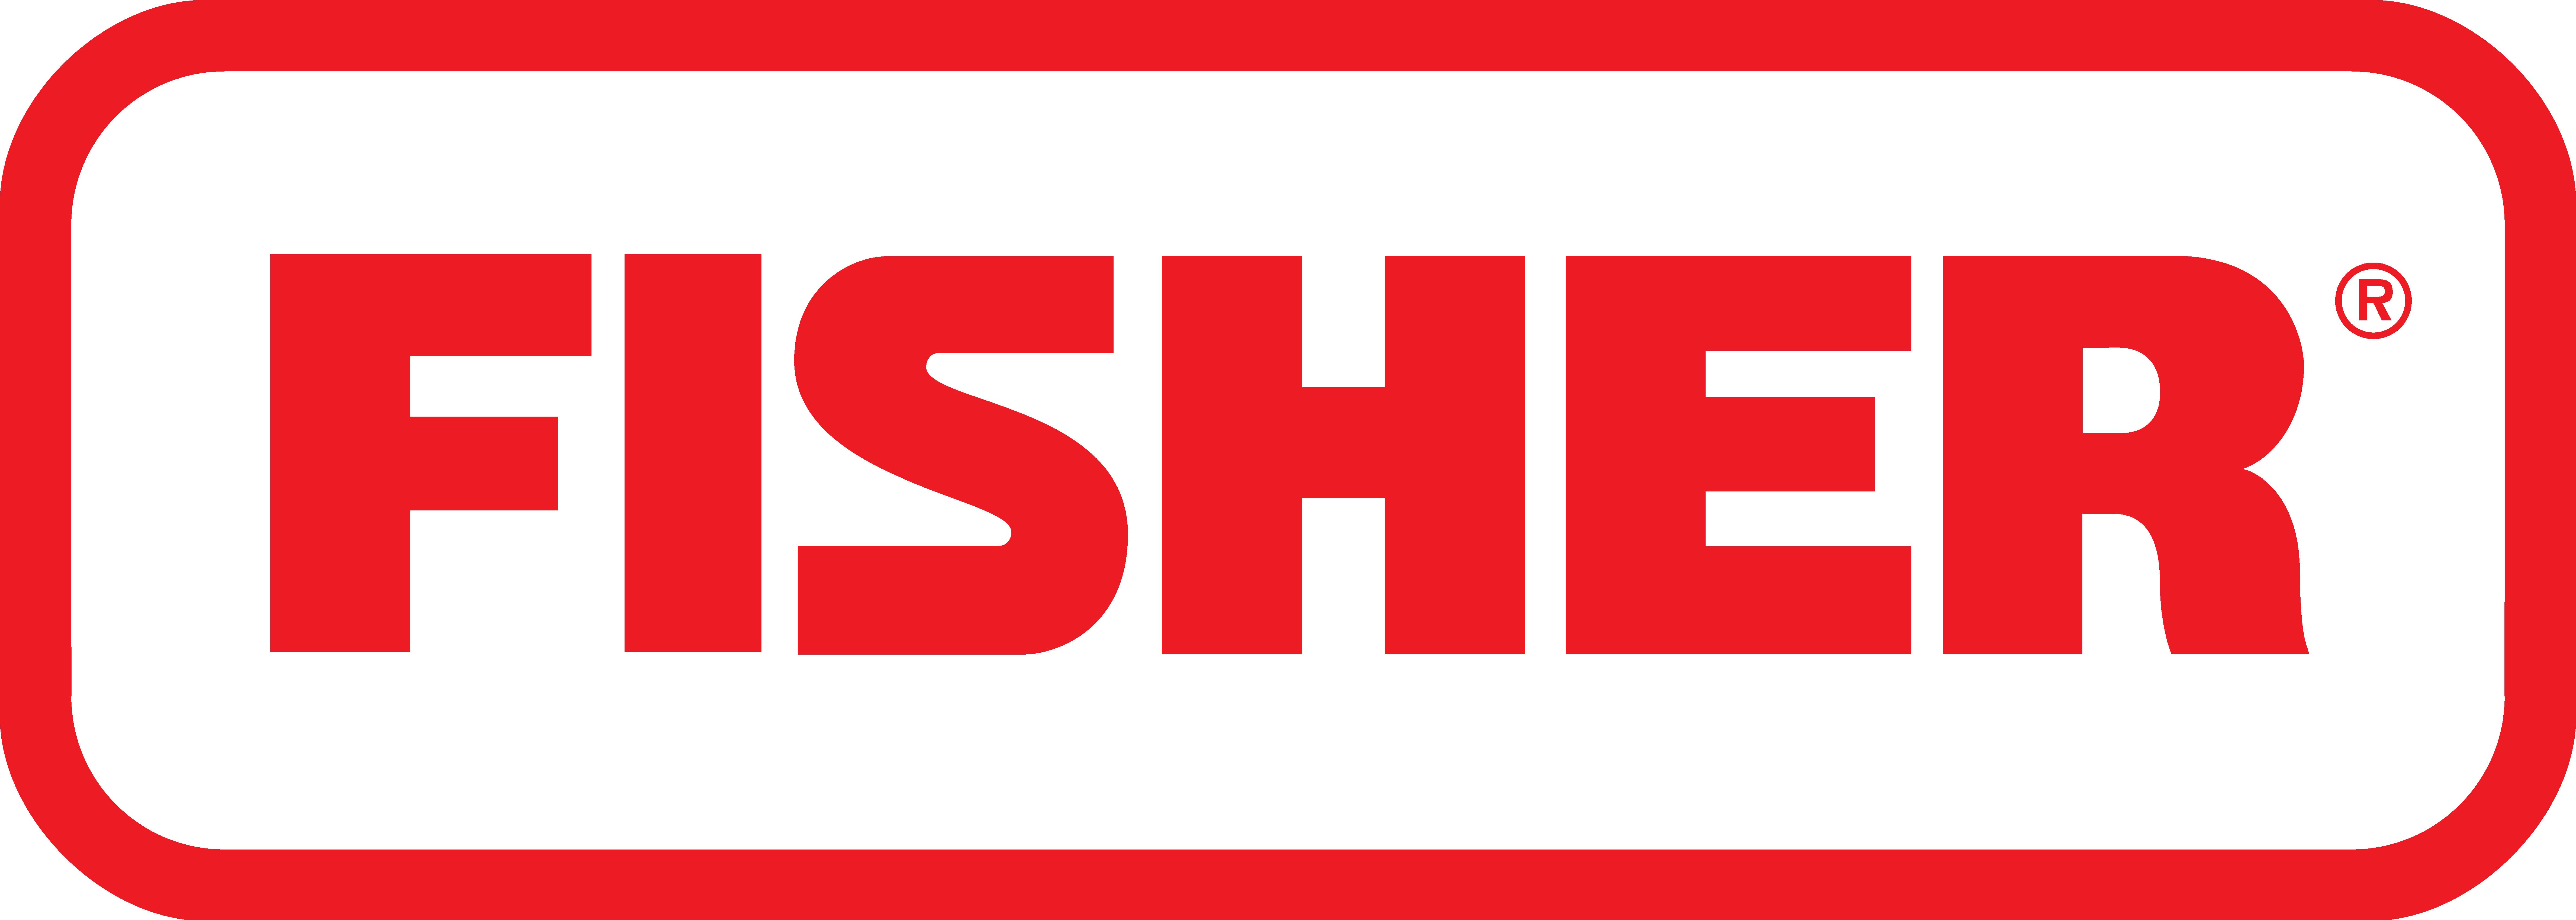 Fisher Logo - Index Of Image Brands